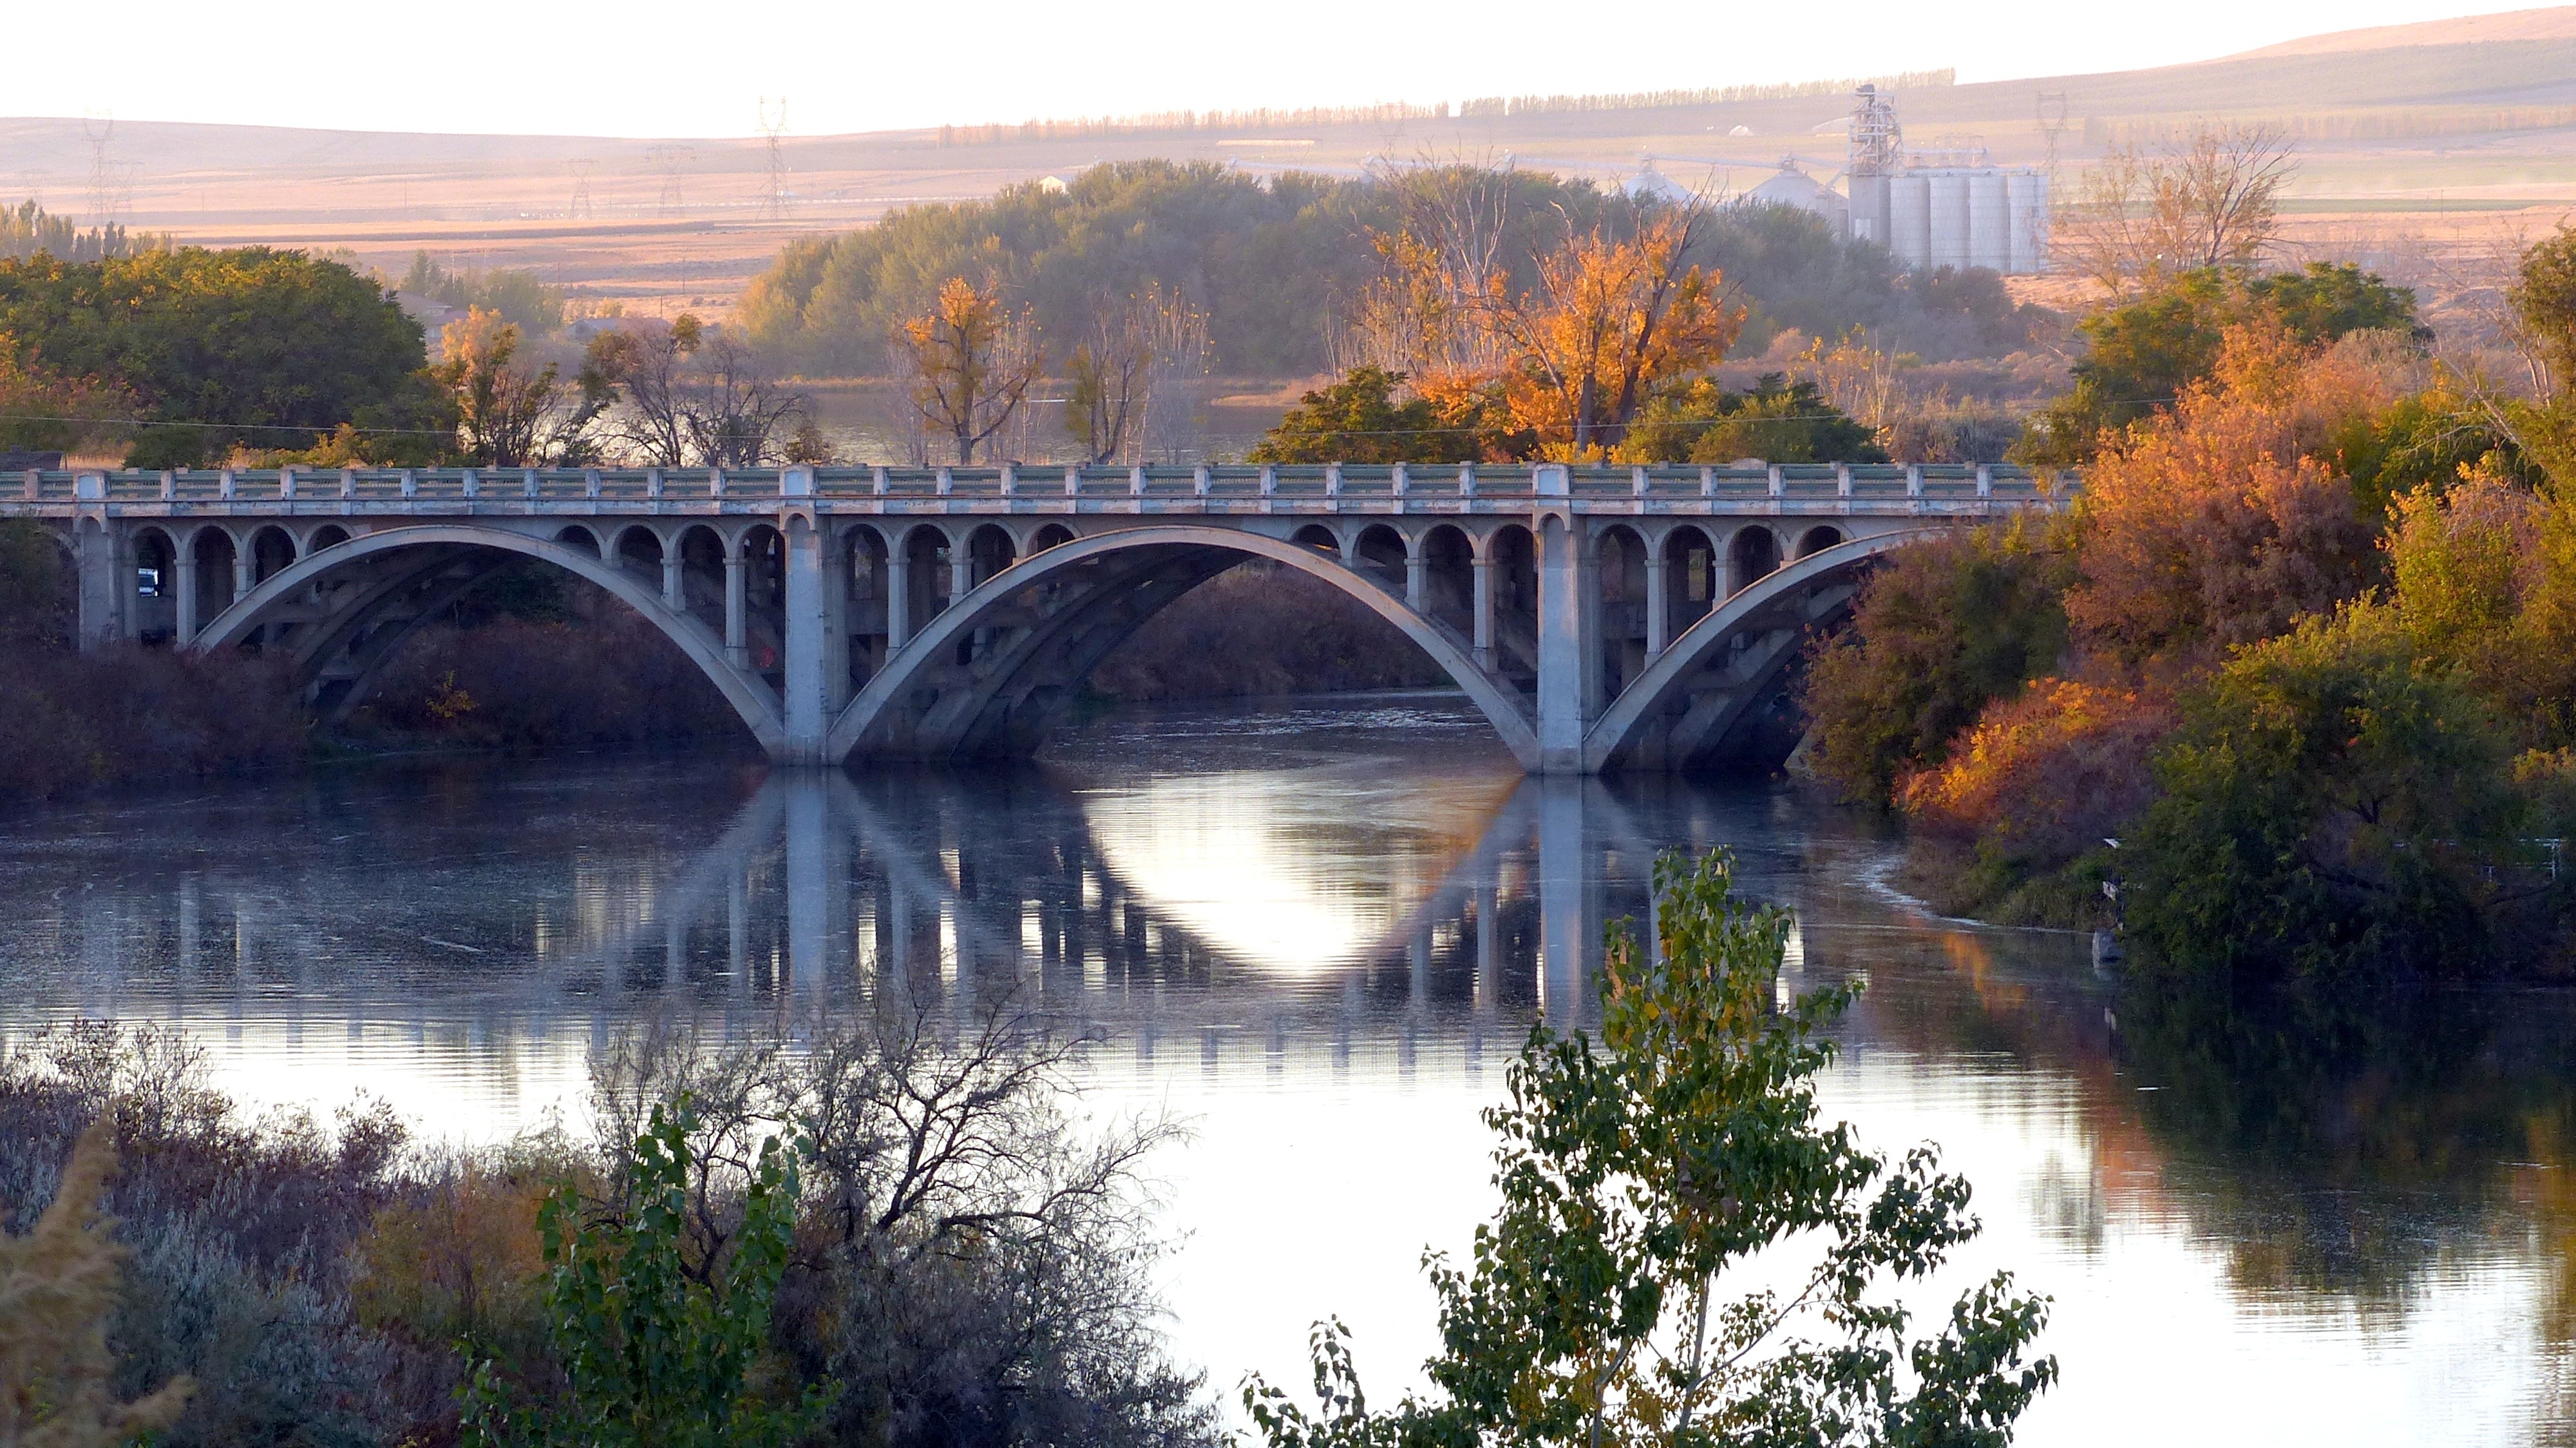 gray concrete bridge near trees and body of water